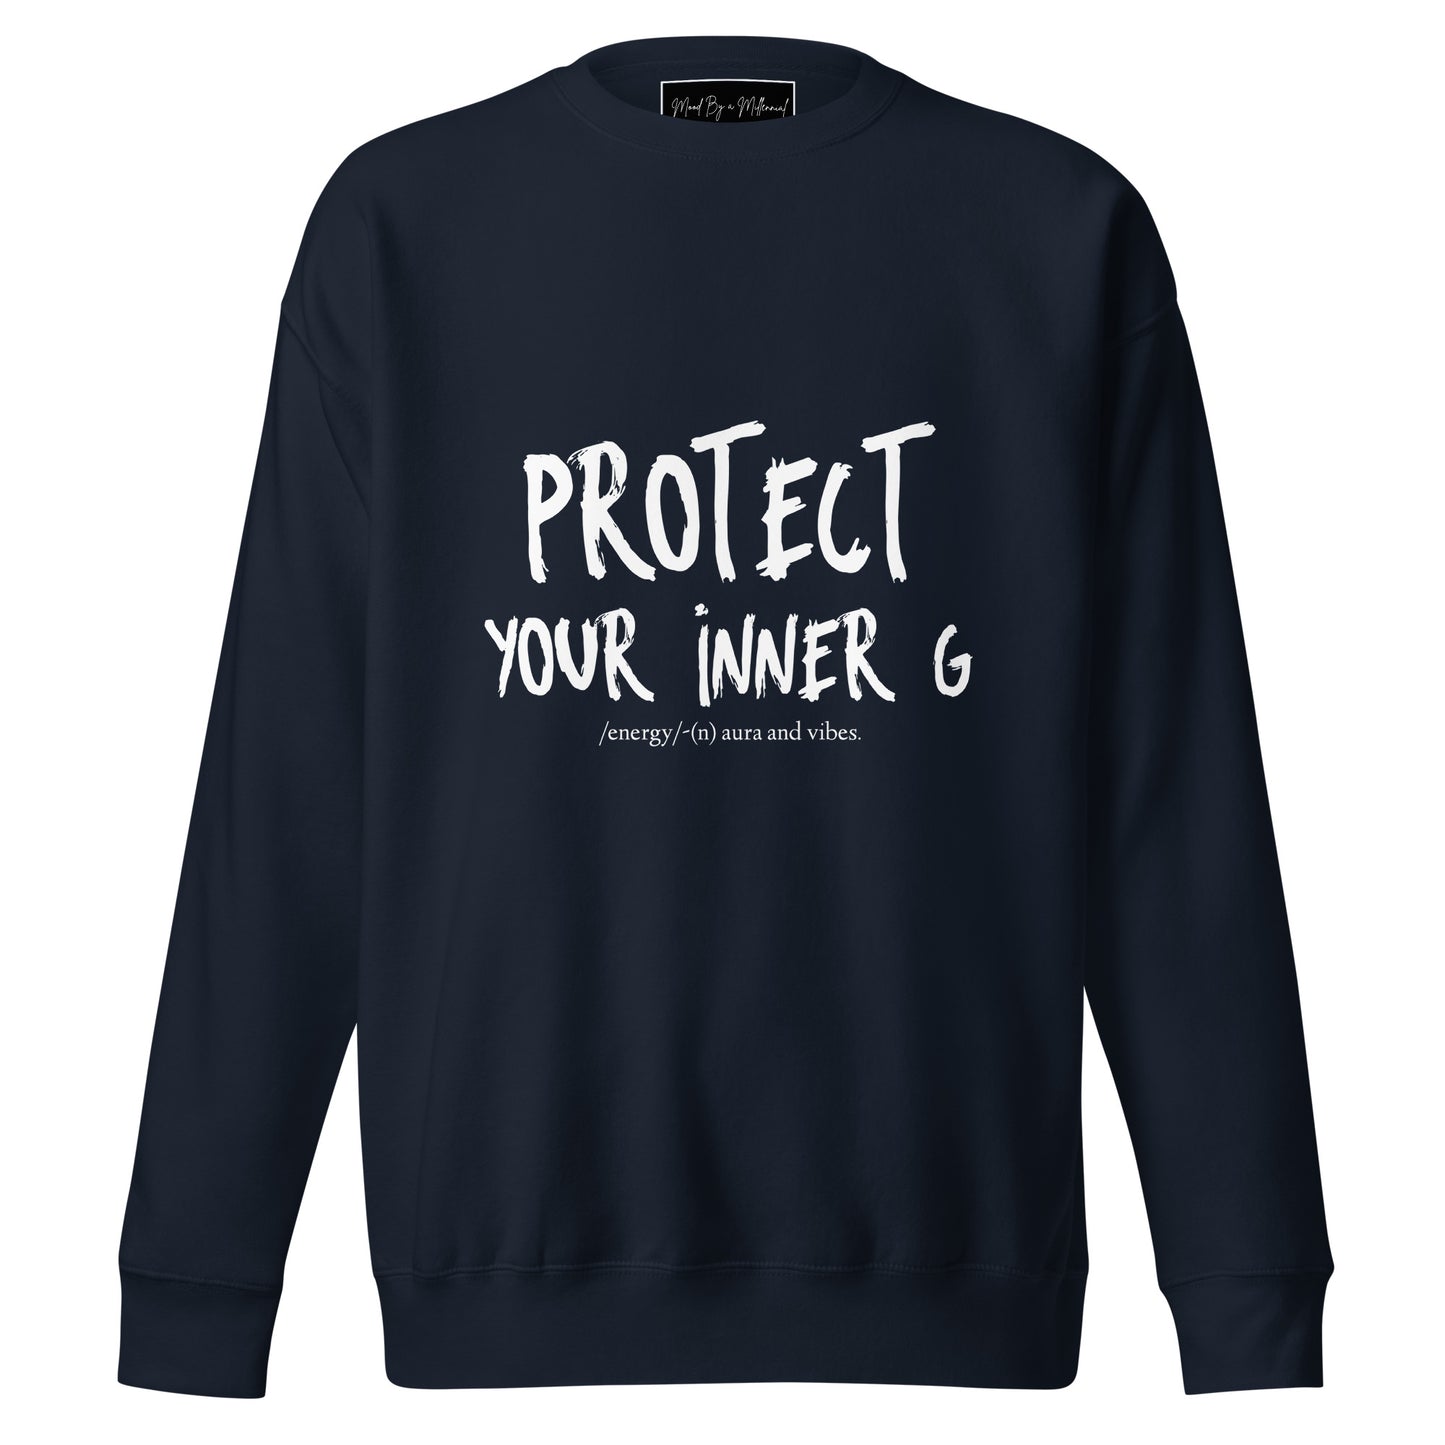 Protect Your Inner G Sweatshirt